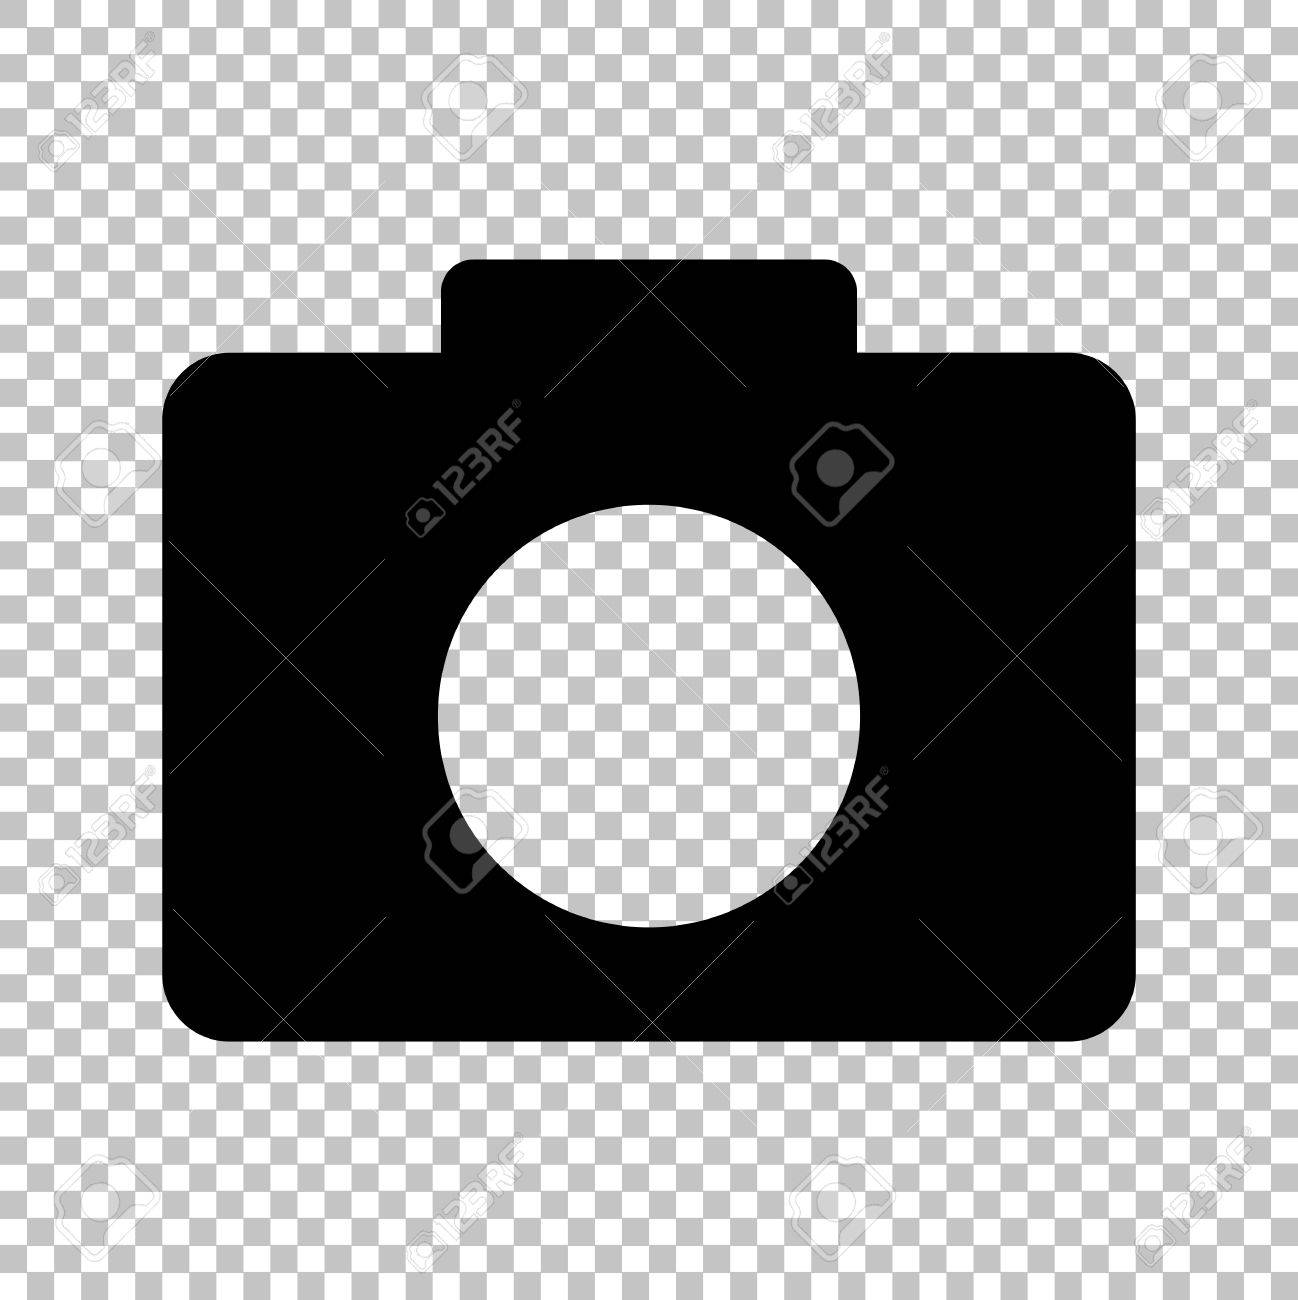 Royalty Free Vector Icon Button With Camera Icon Vector Art 